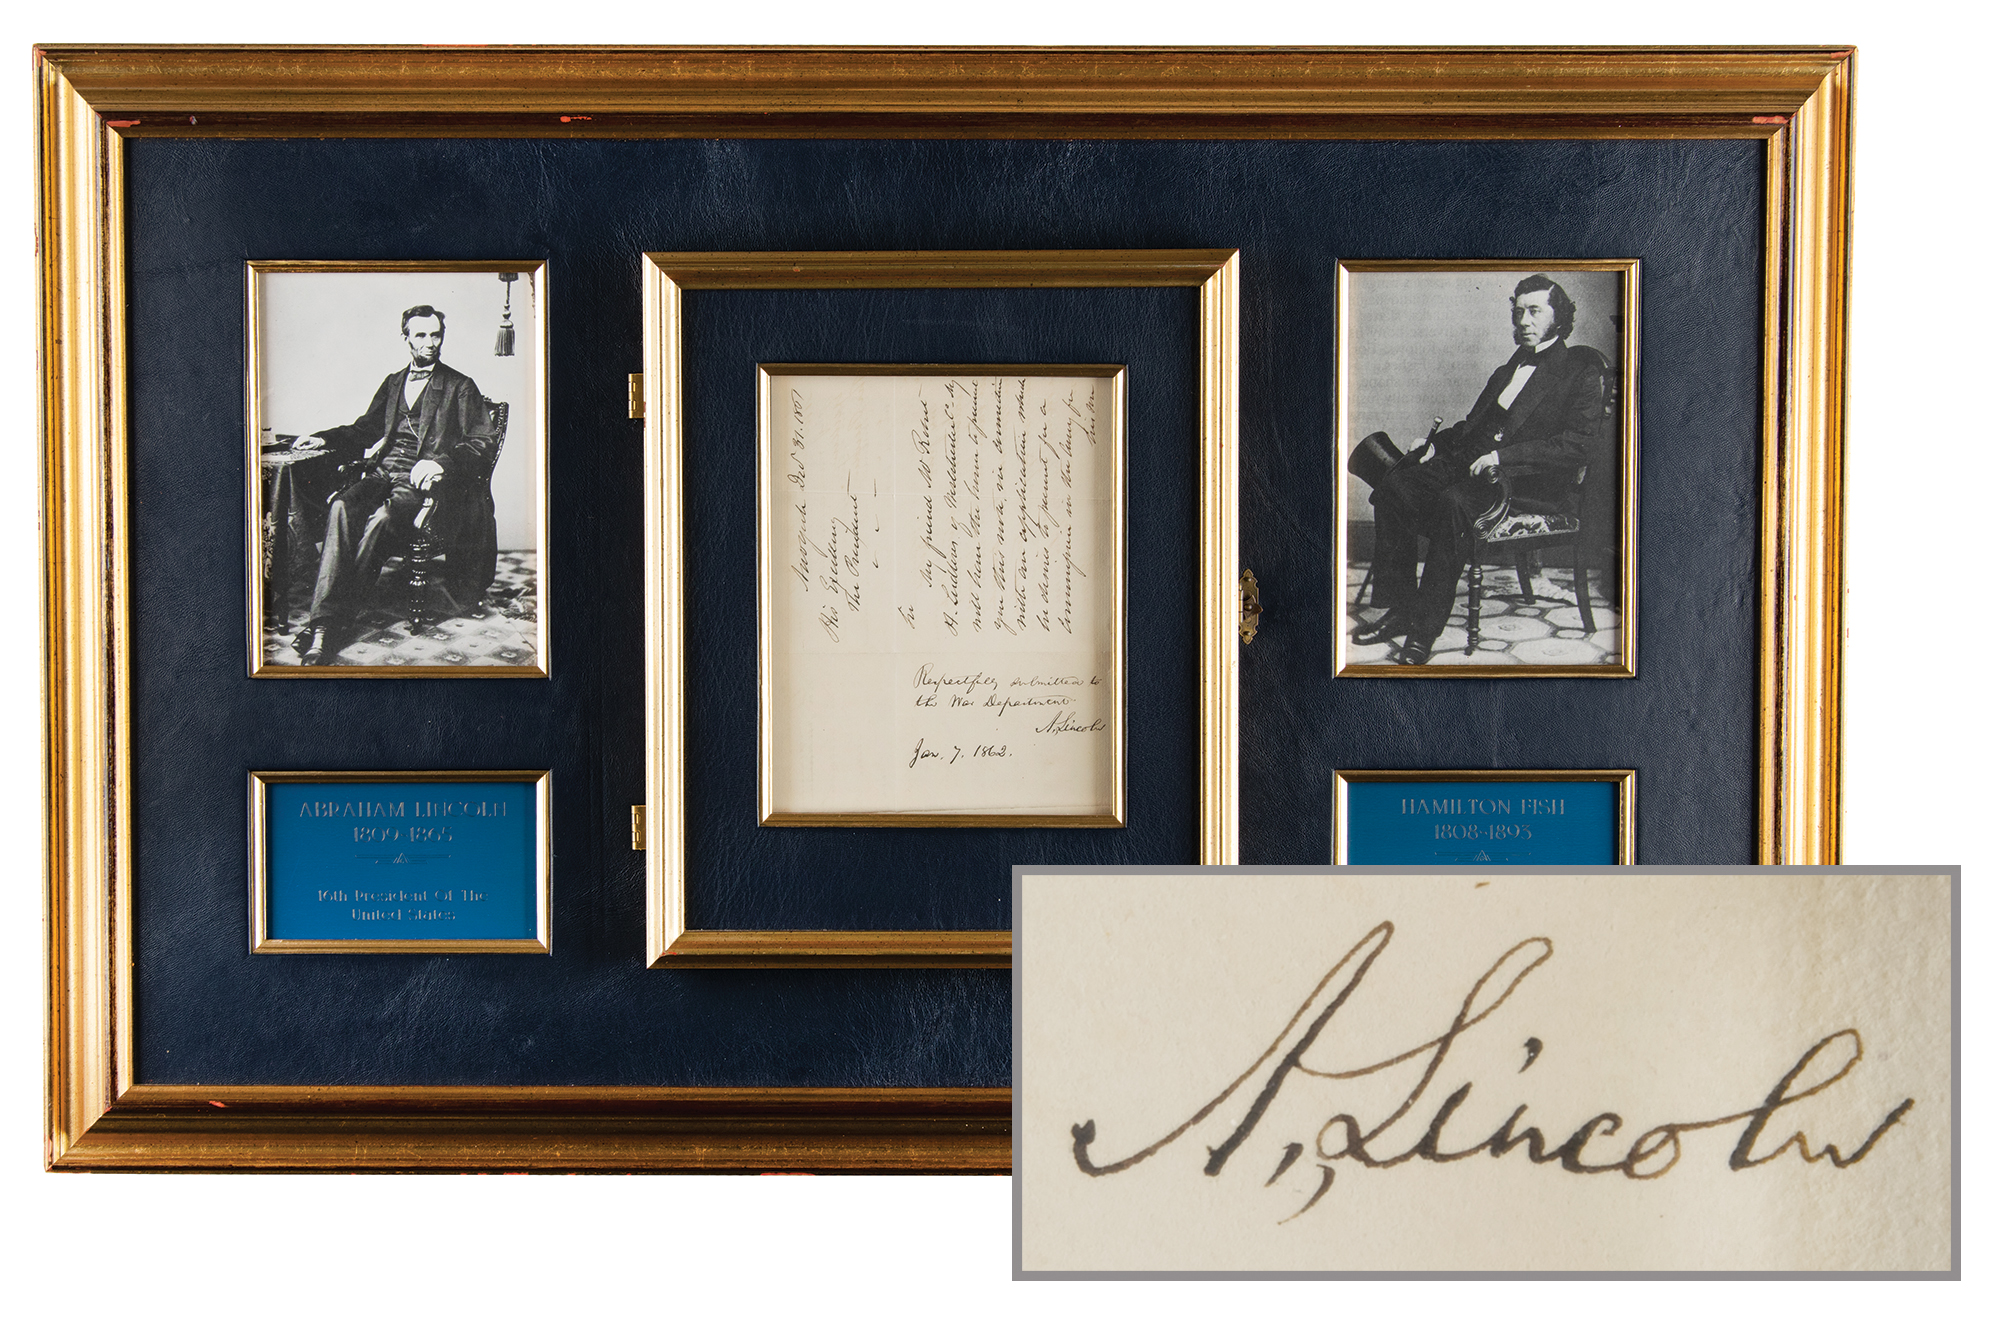 Lot #23 Abraham Lincoln Autograph Endorsement Signed as President for Bull Run Veteran - Image 1